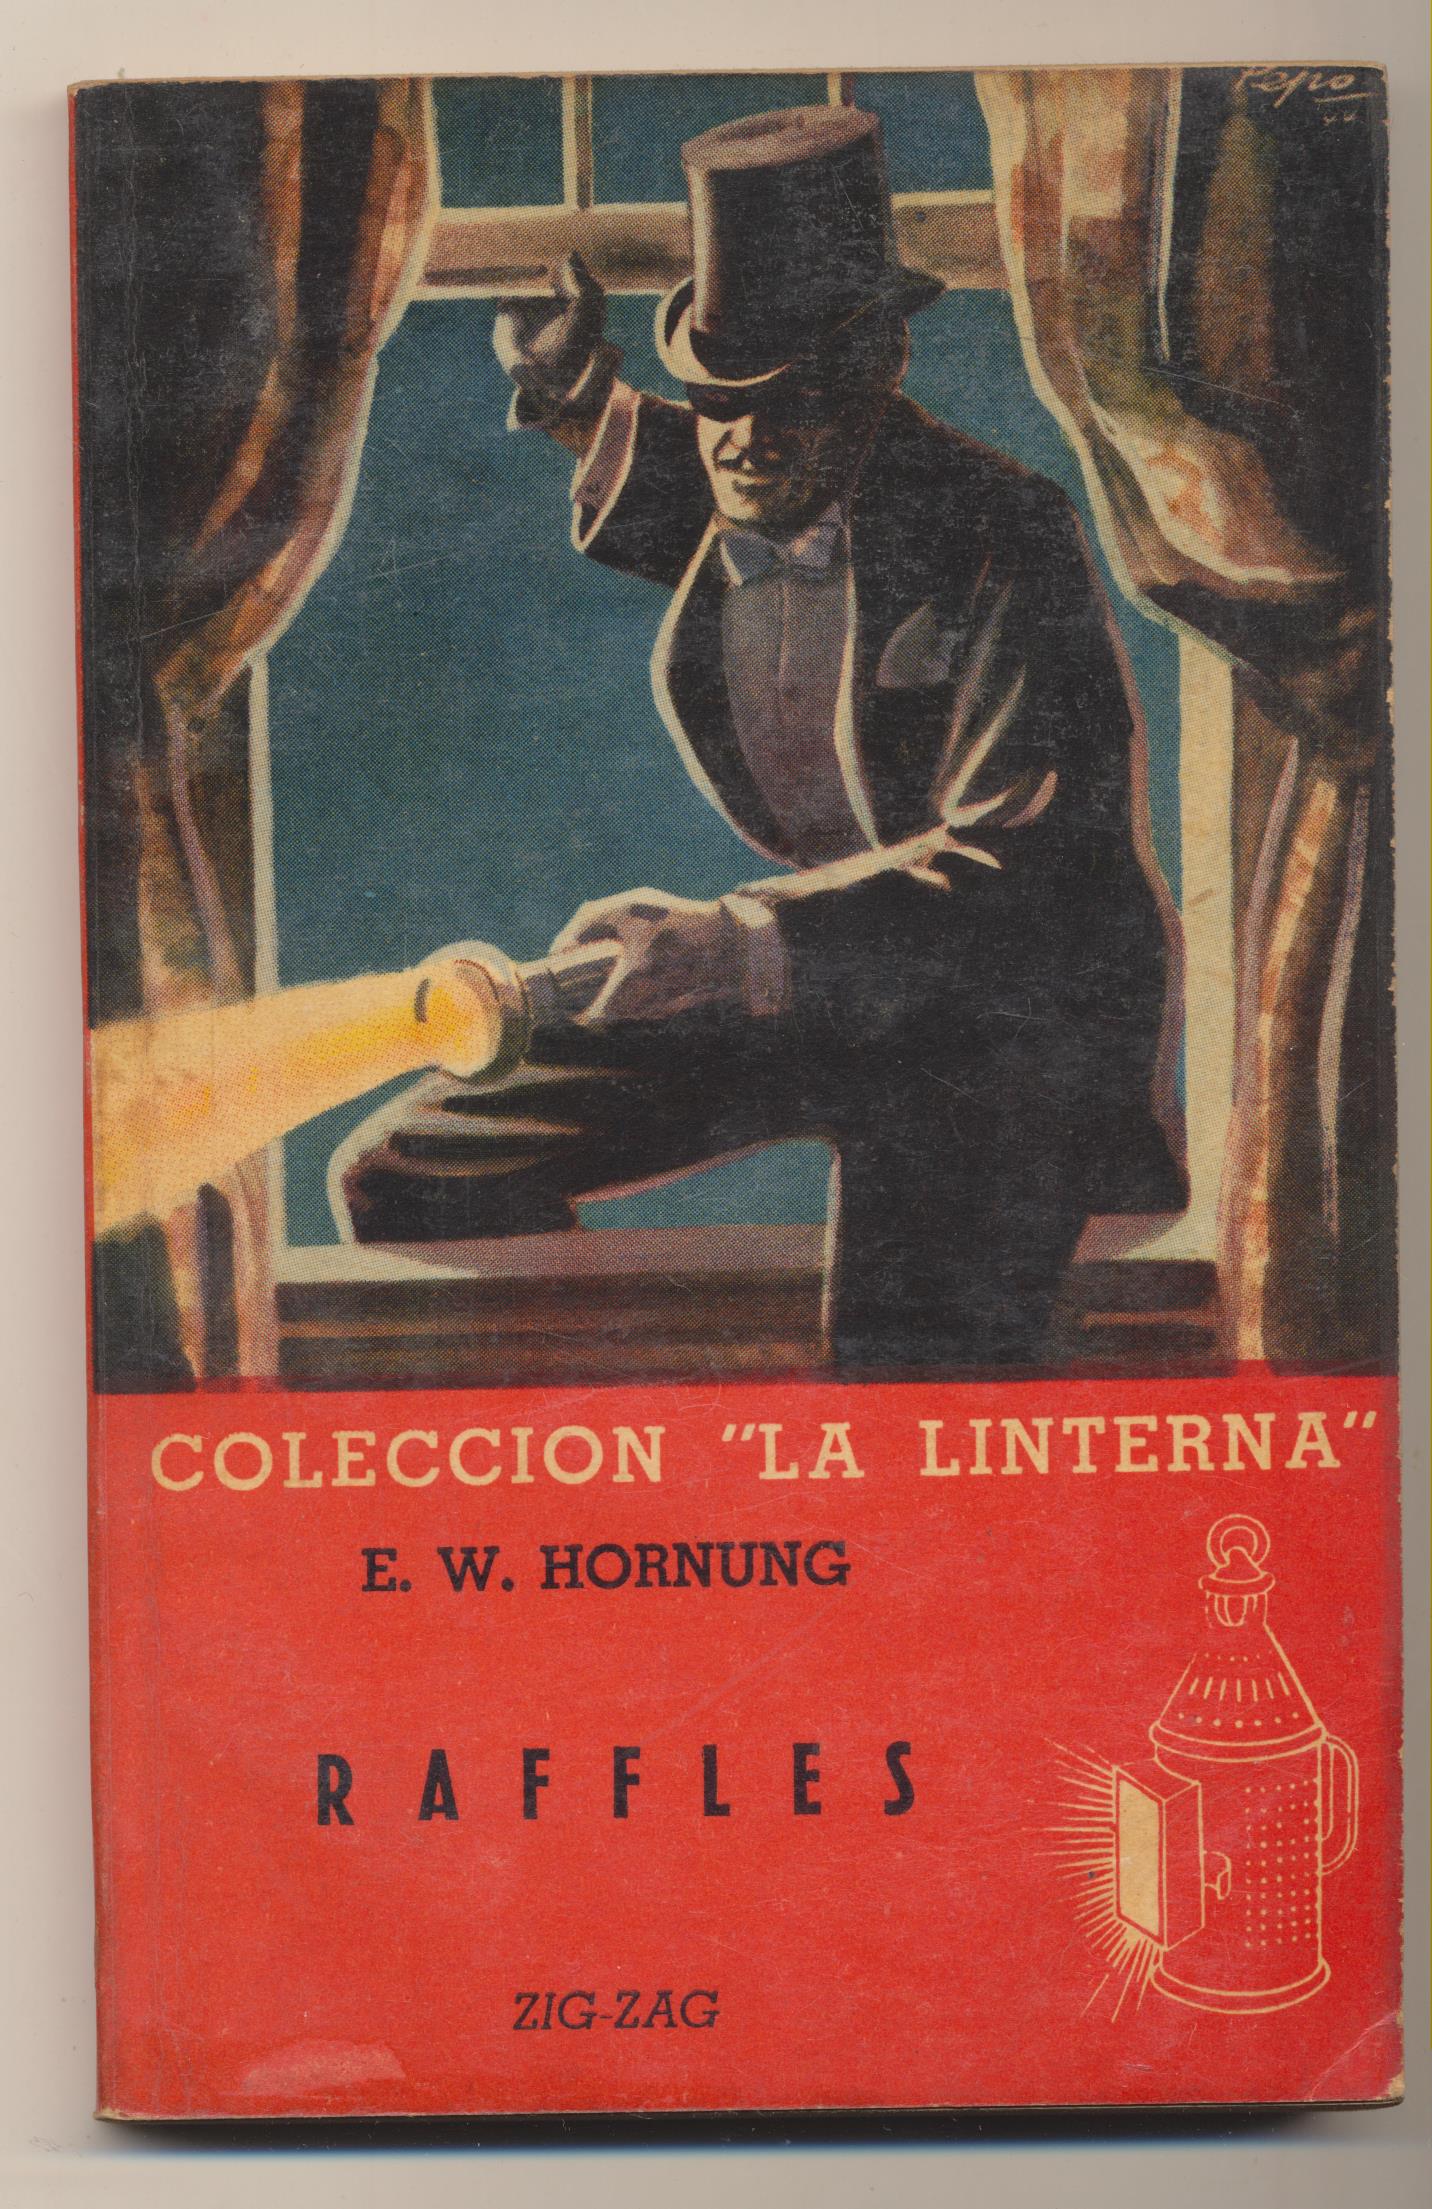 La Linterna nº 15. Raffles por E. W. Hornung. Editorial Zig-Zag-Chile 1945. DIFÍCIL